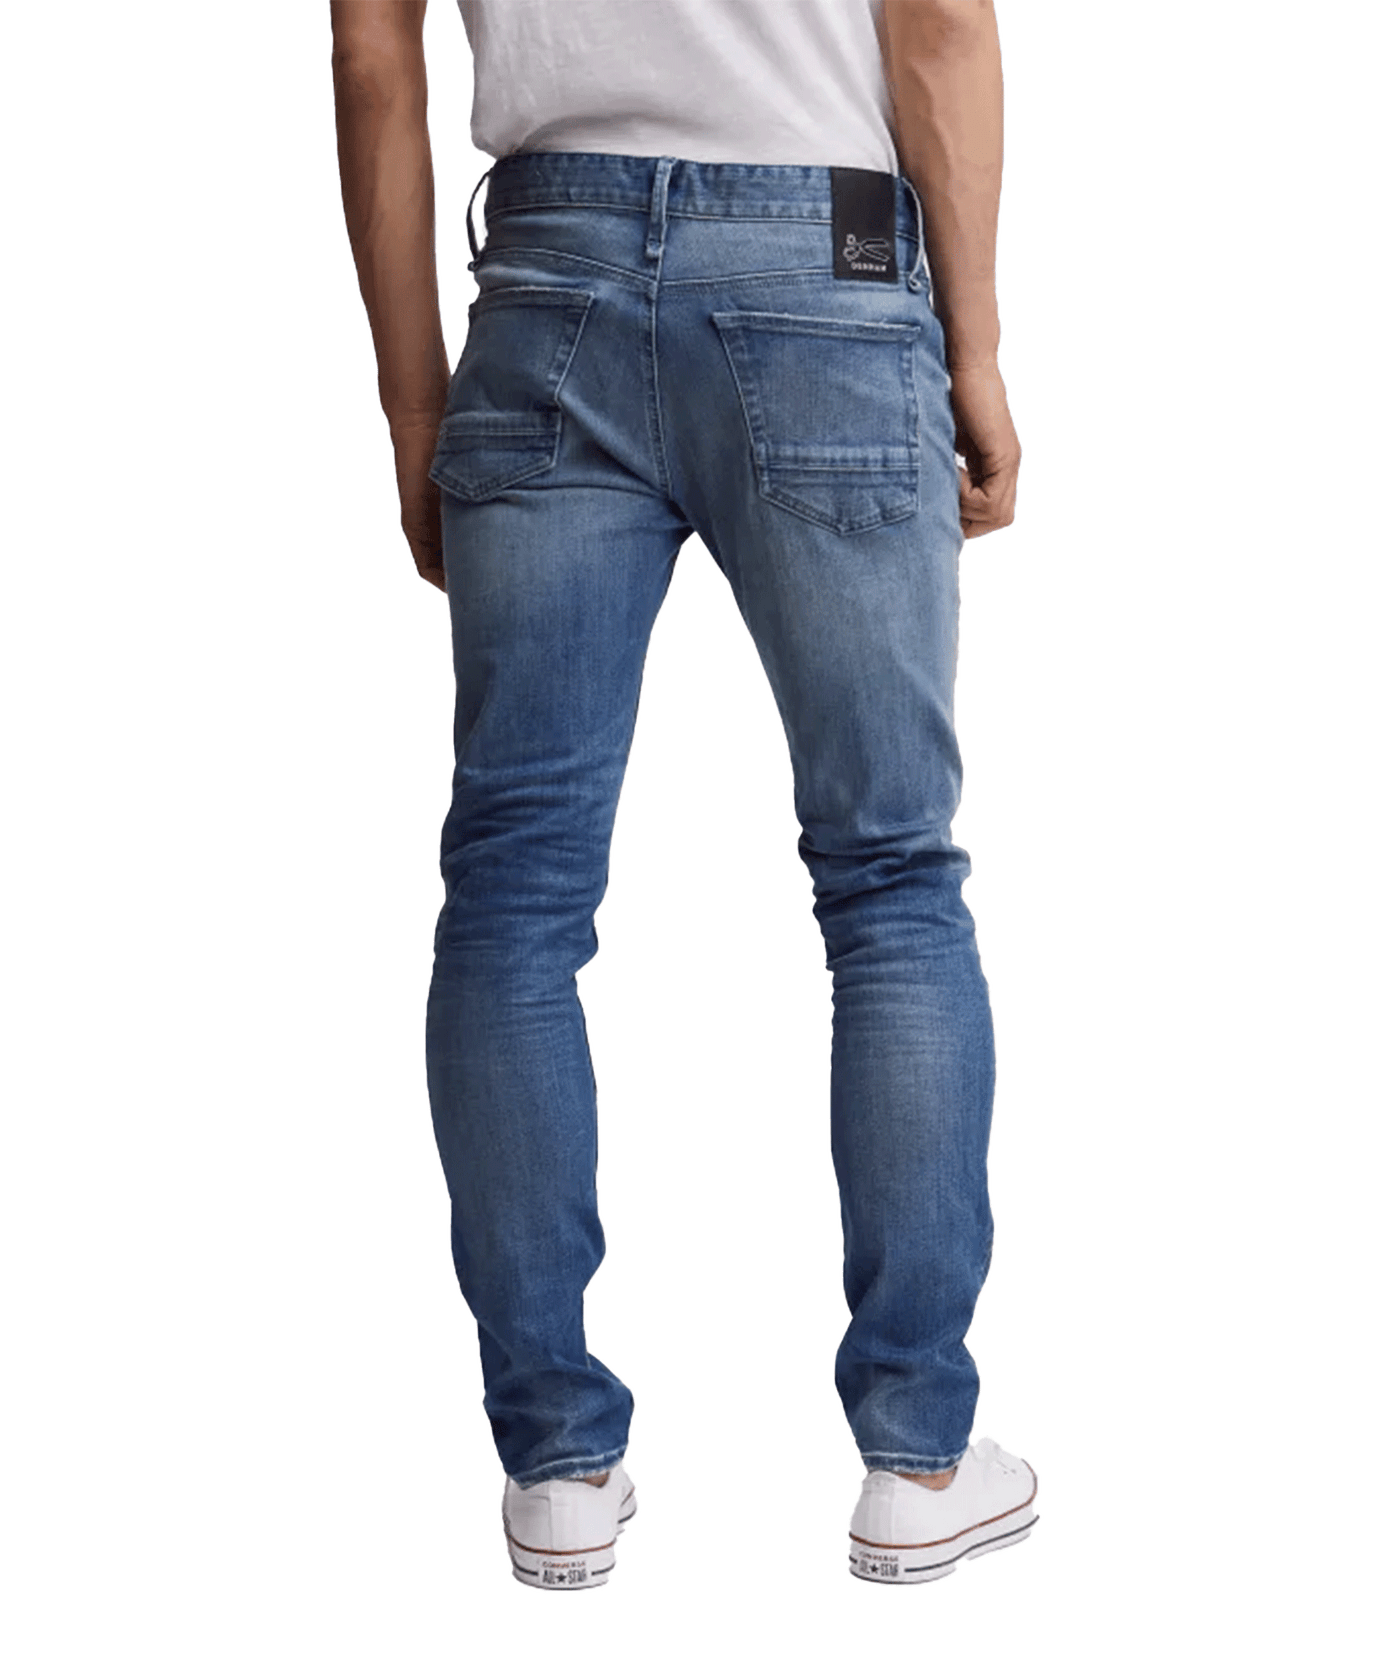 Denham - Bolt - Jeans - Gots Natural Light Indigo